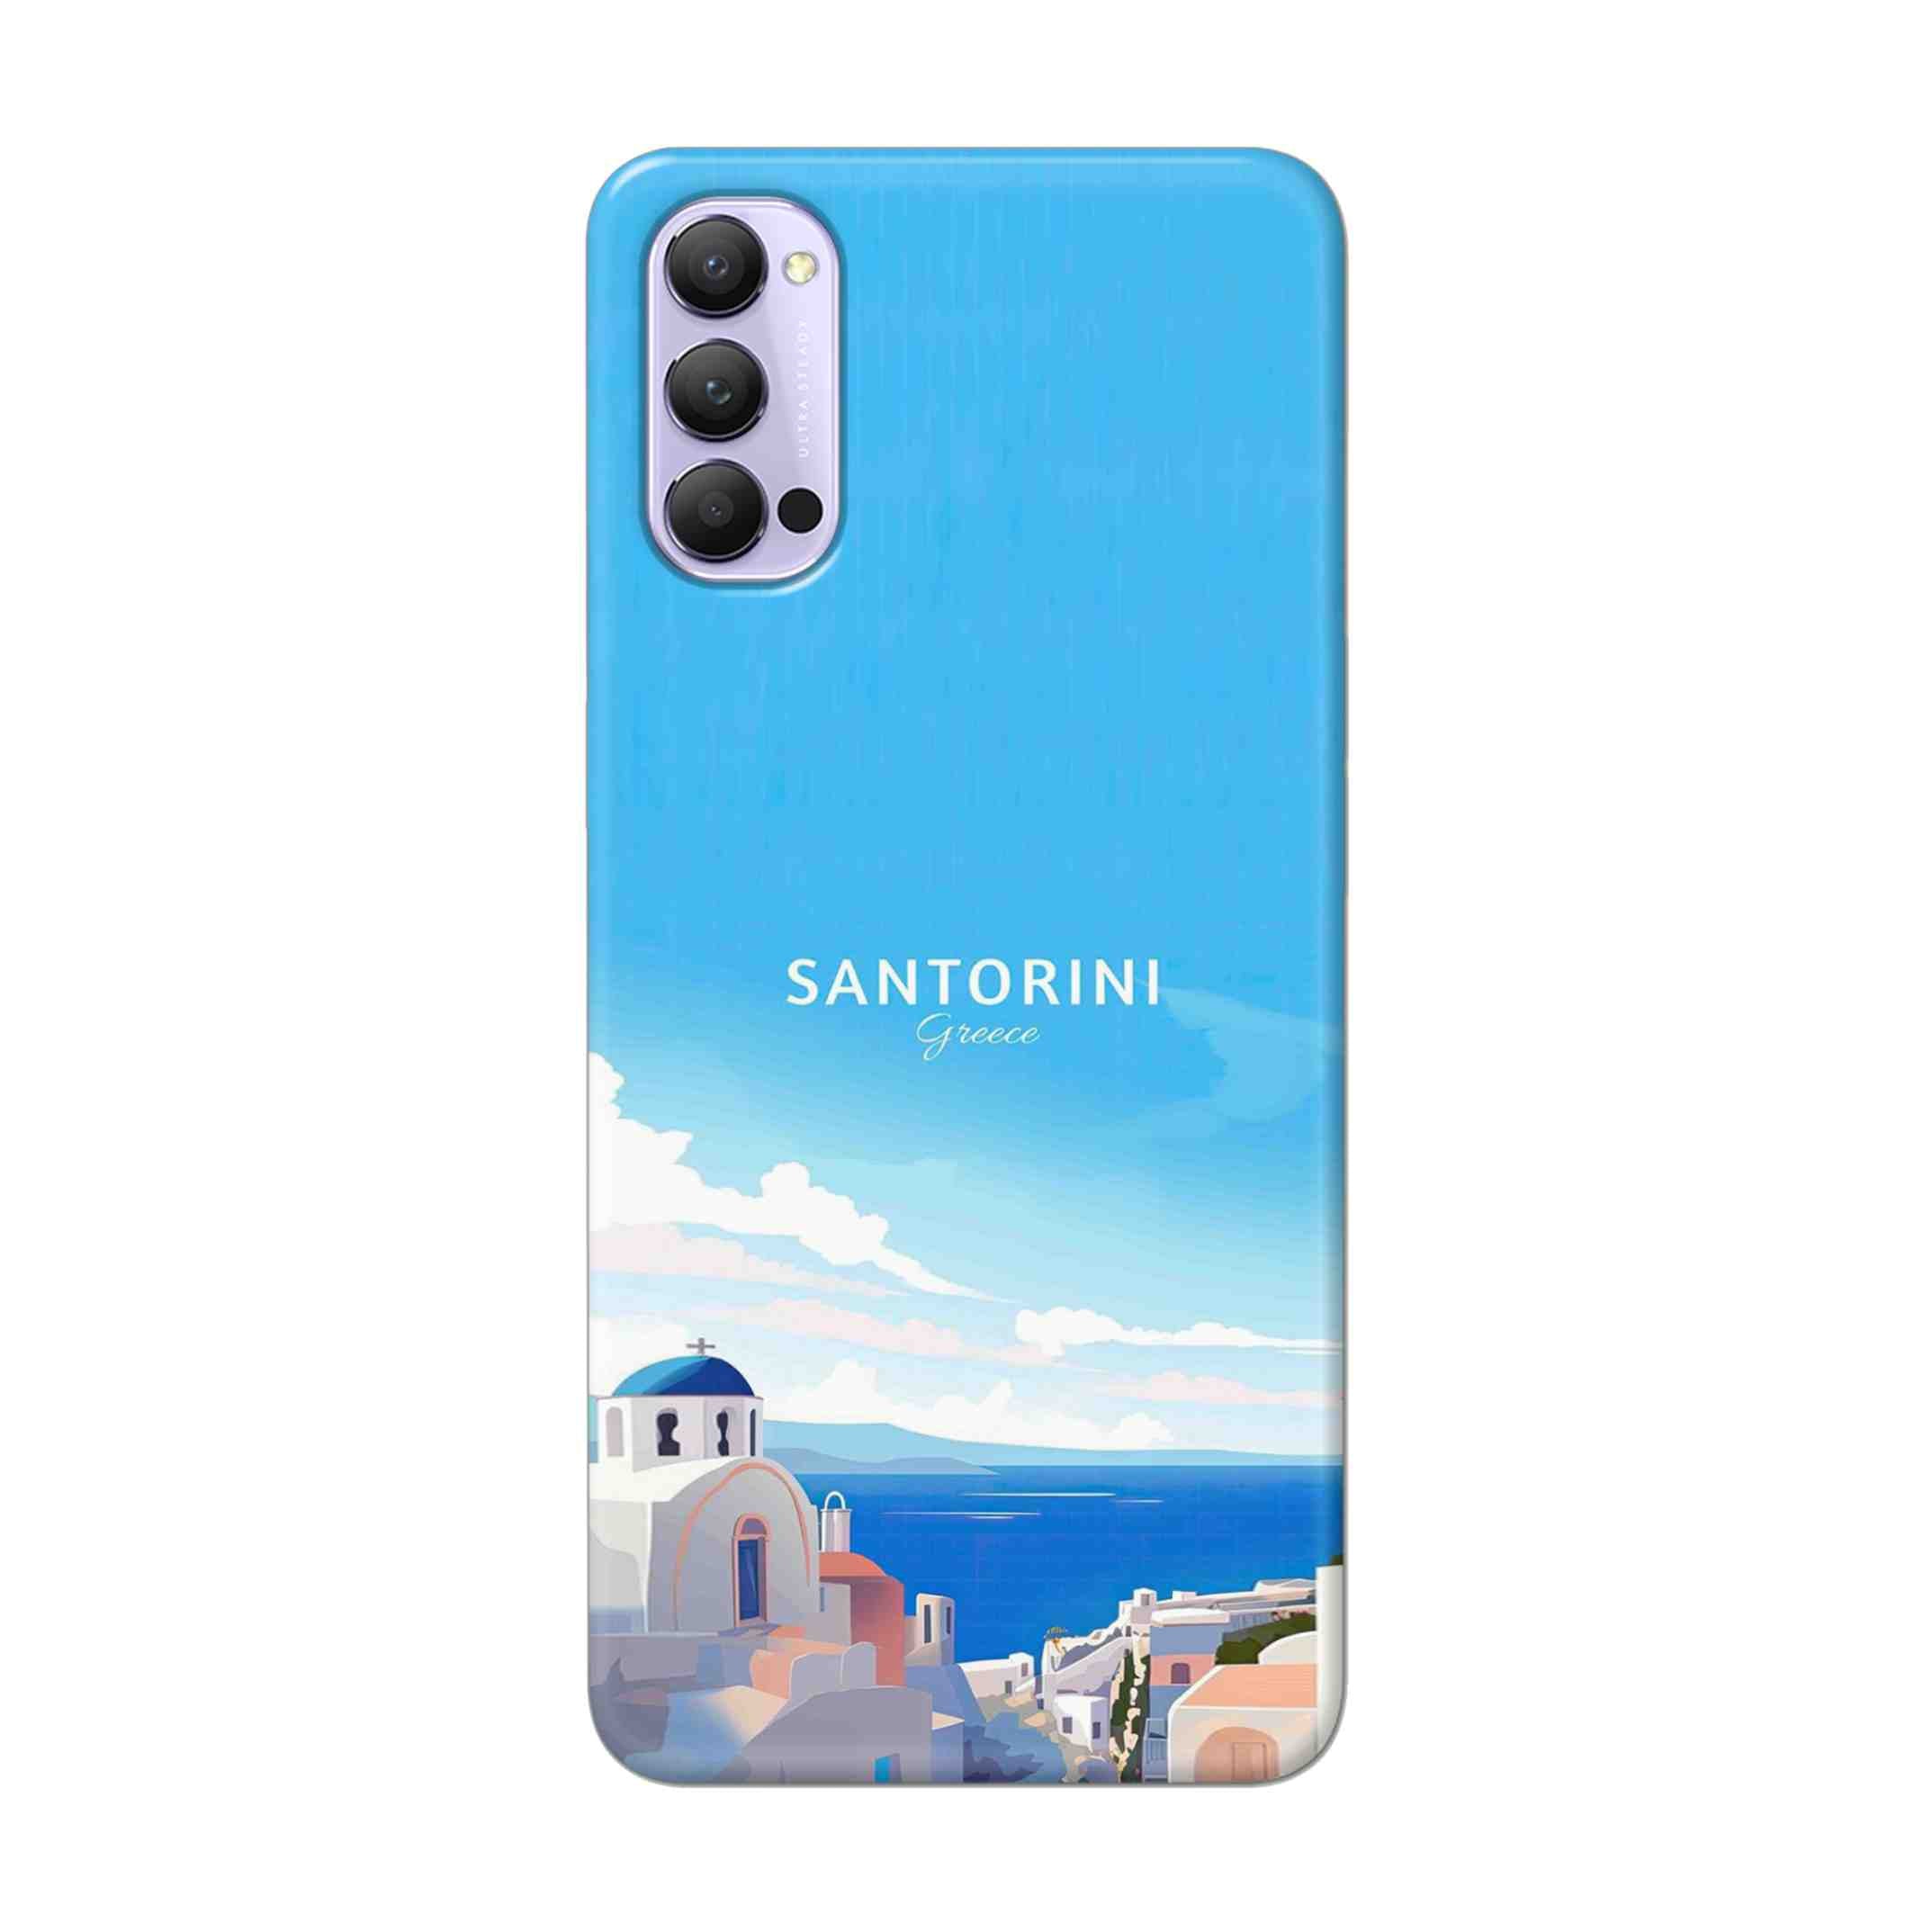 Buy Santorini Hard Back Mobile Phone Case Cover For Oppo Reno 4 Pro Online